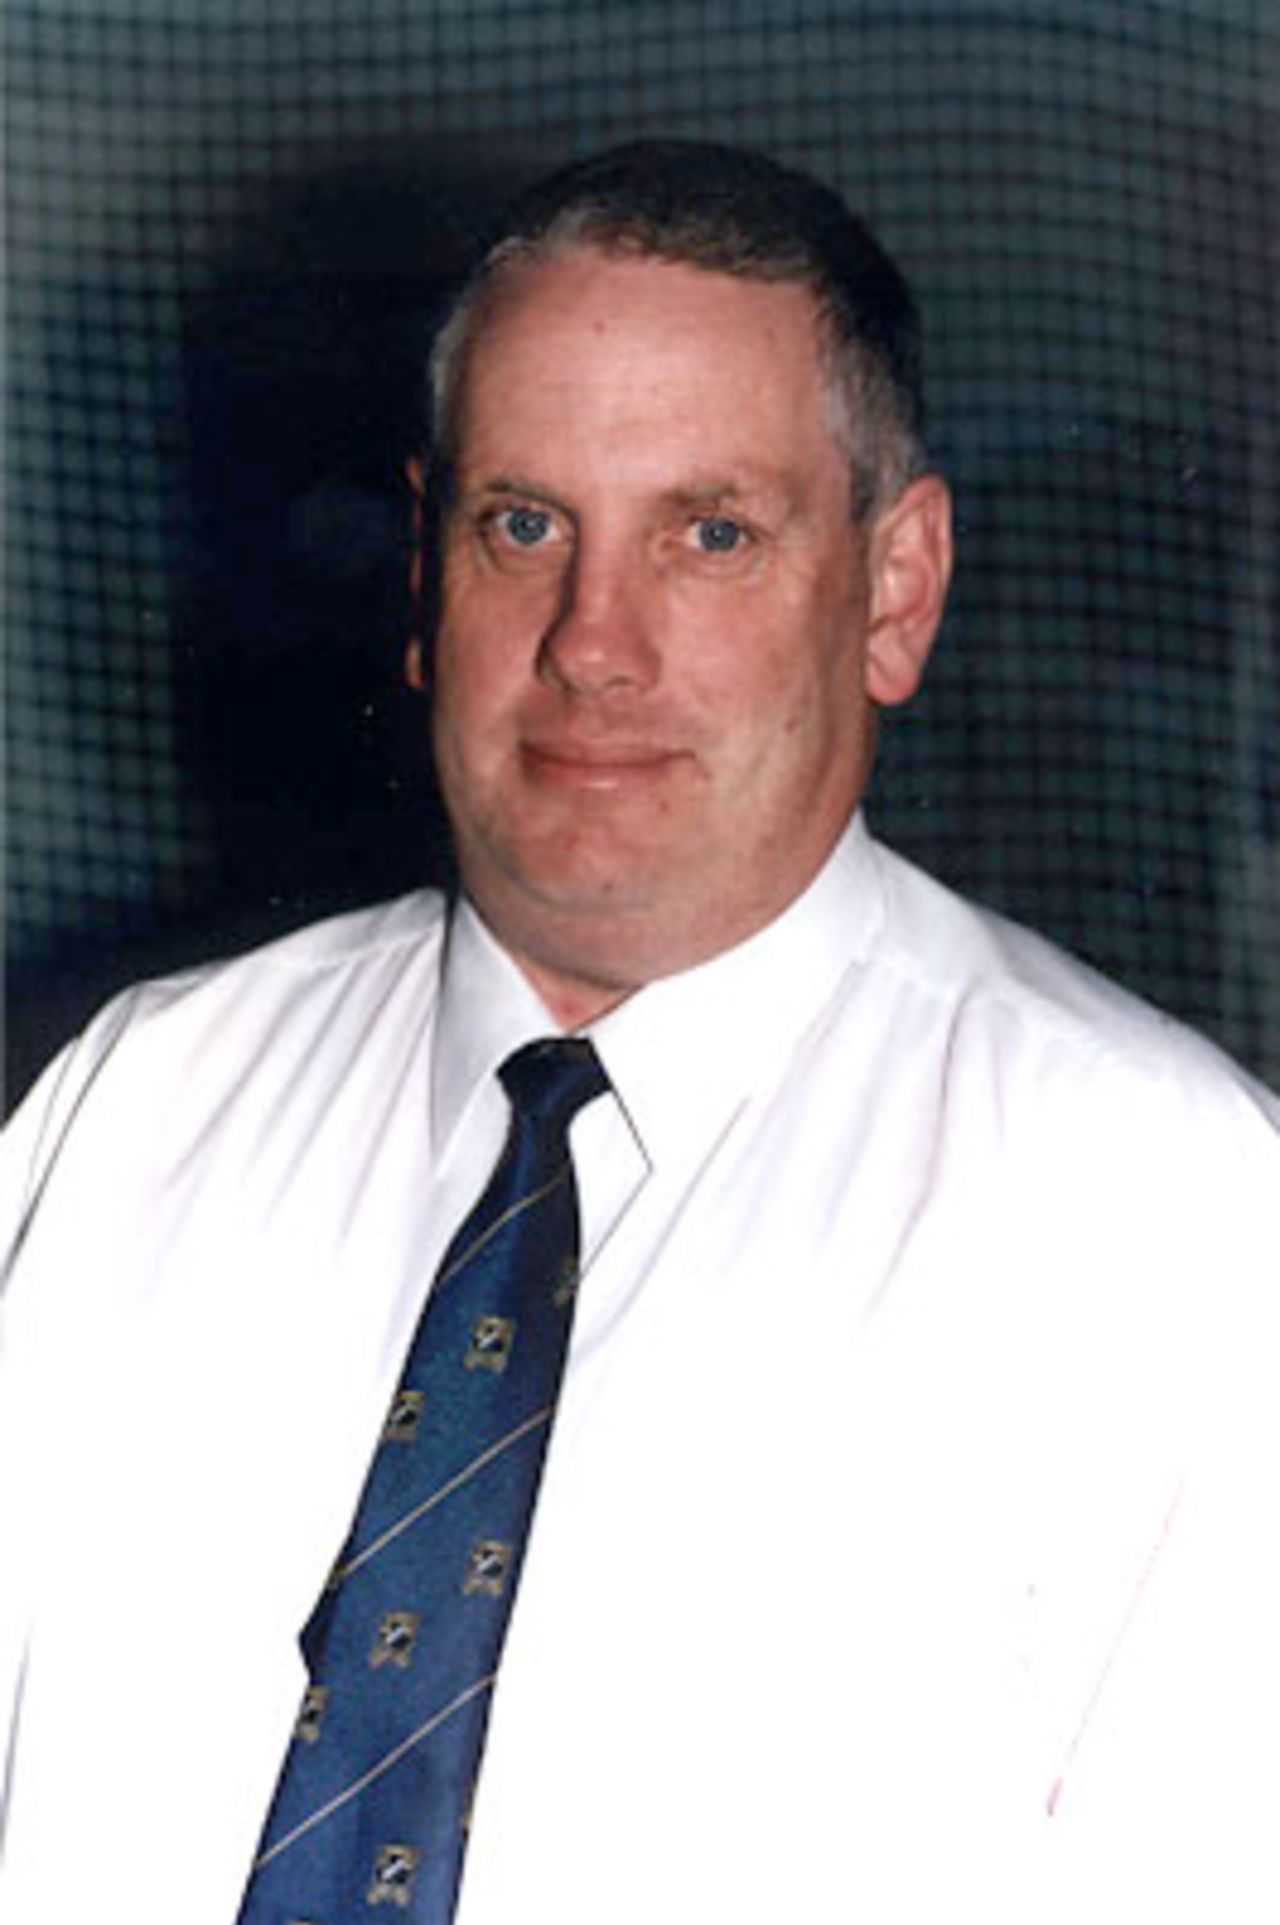 Portrait of Jeremy Busby - 2000/01 New Zealand Cricket reserve panel umpire